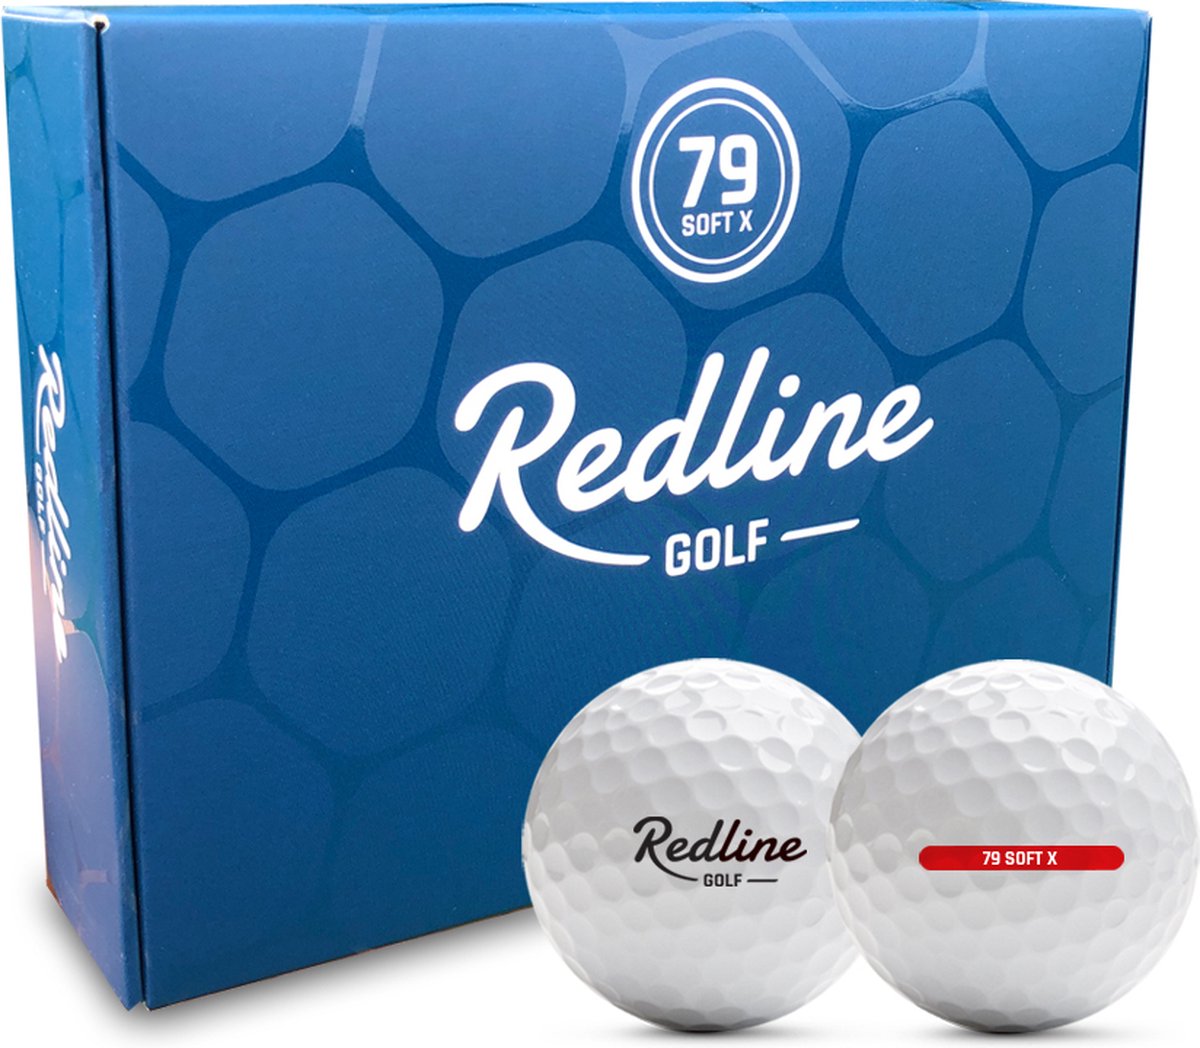 Redline 79 Soft X 4 dozijn